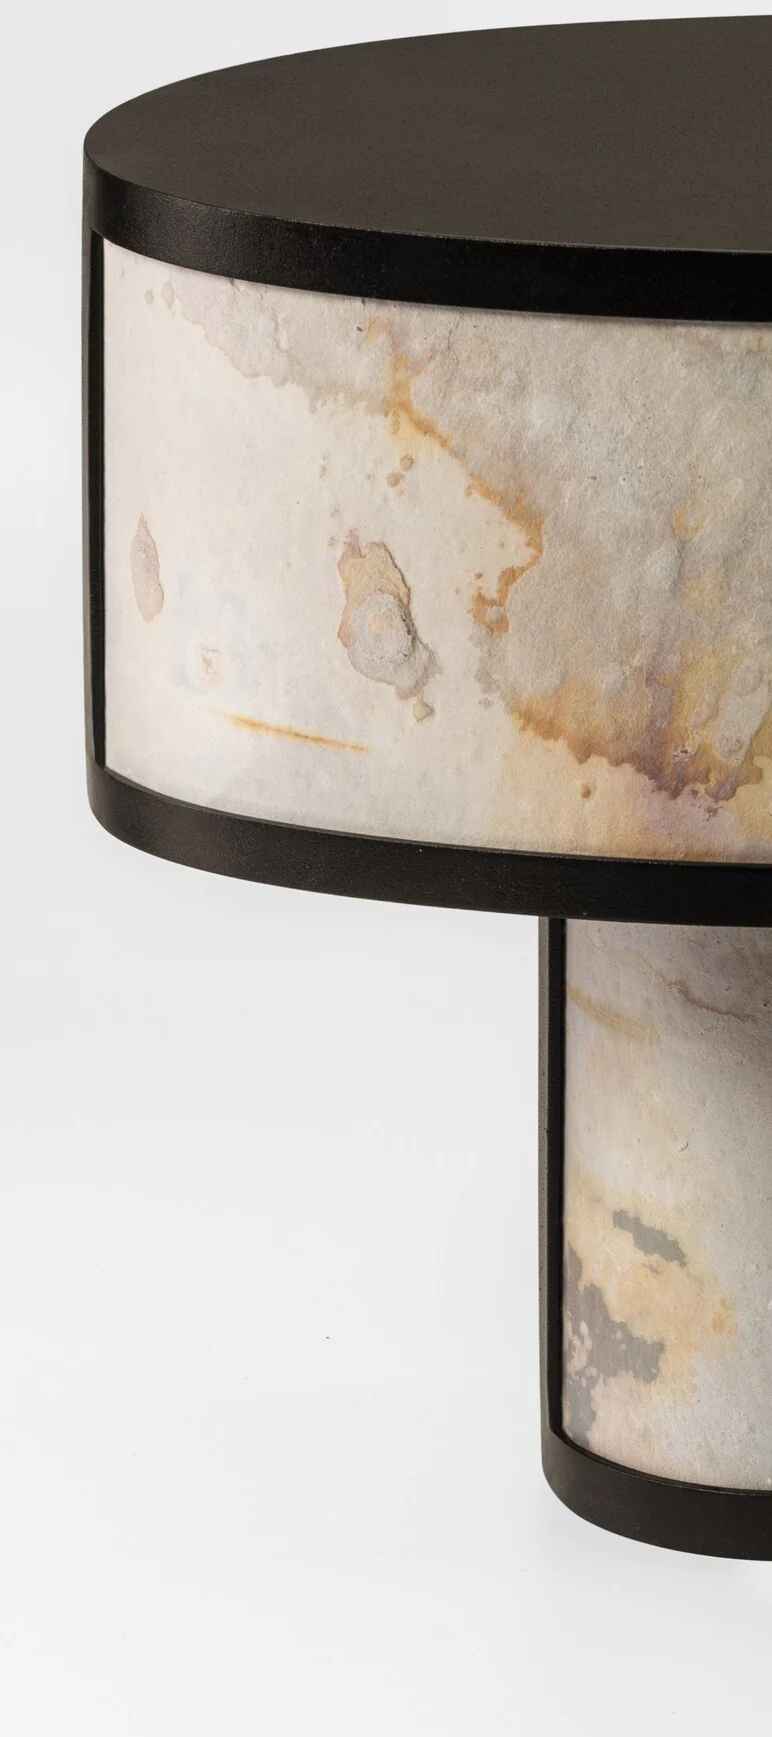 Stella Table Lamp - Indian Autumn Rustic Slate